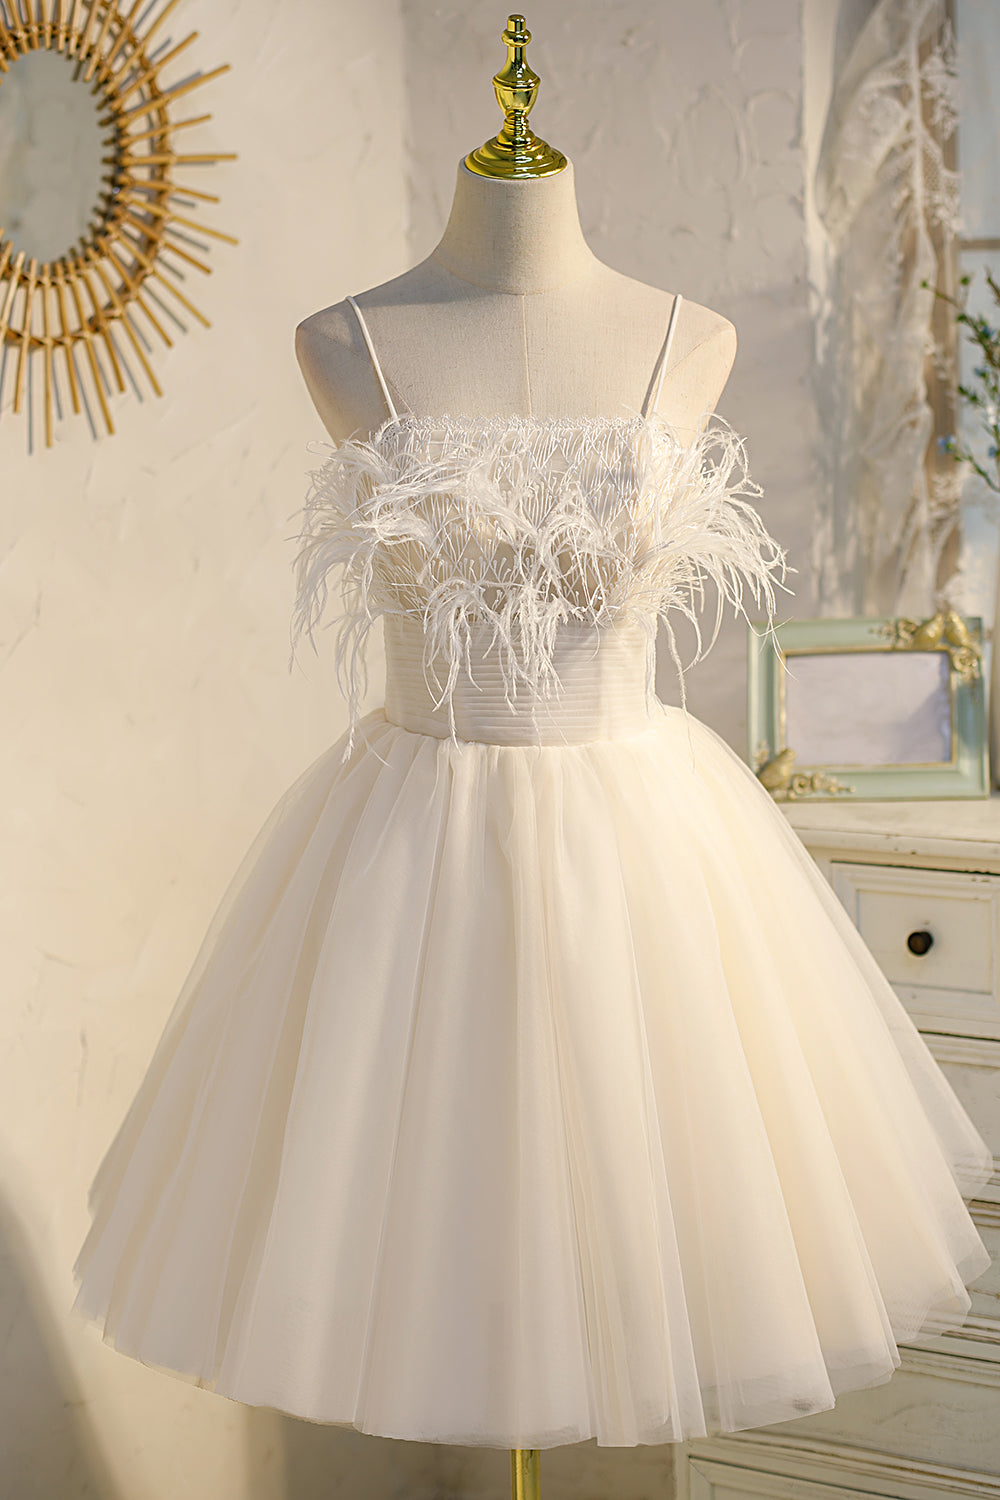 Bridesmaids Dress Styles, Chic Sleeveless Spaghetti Straps Tulle Princess Homecoming Dresses